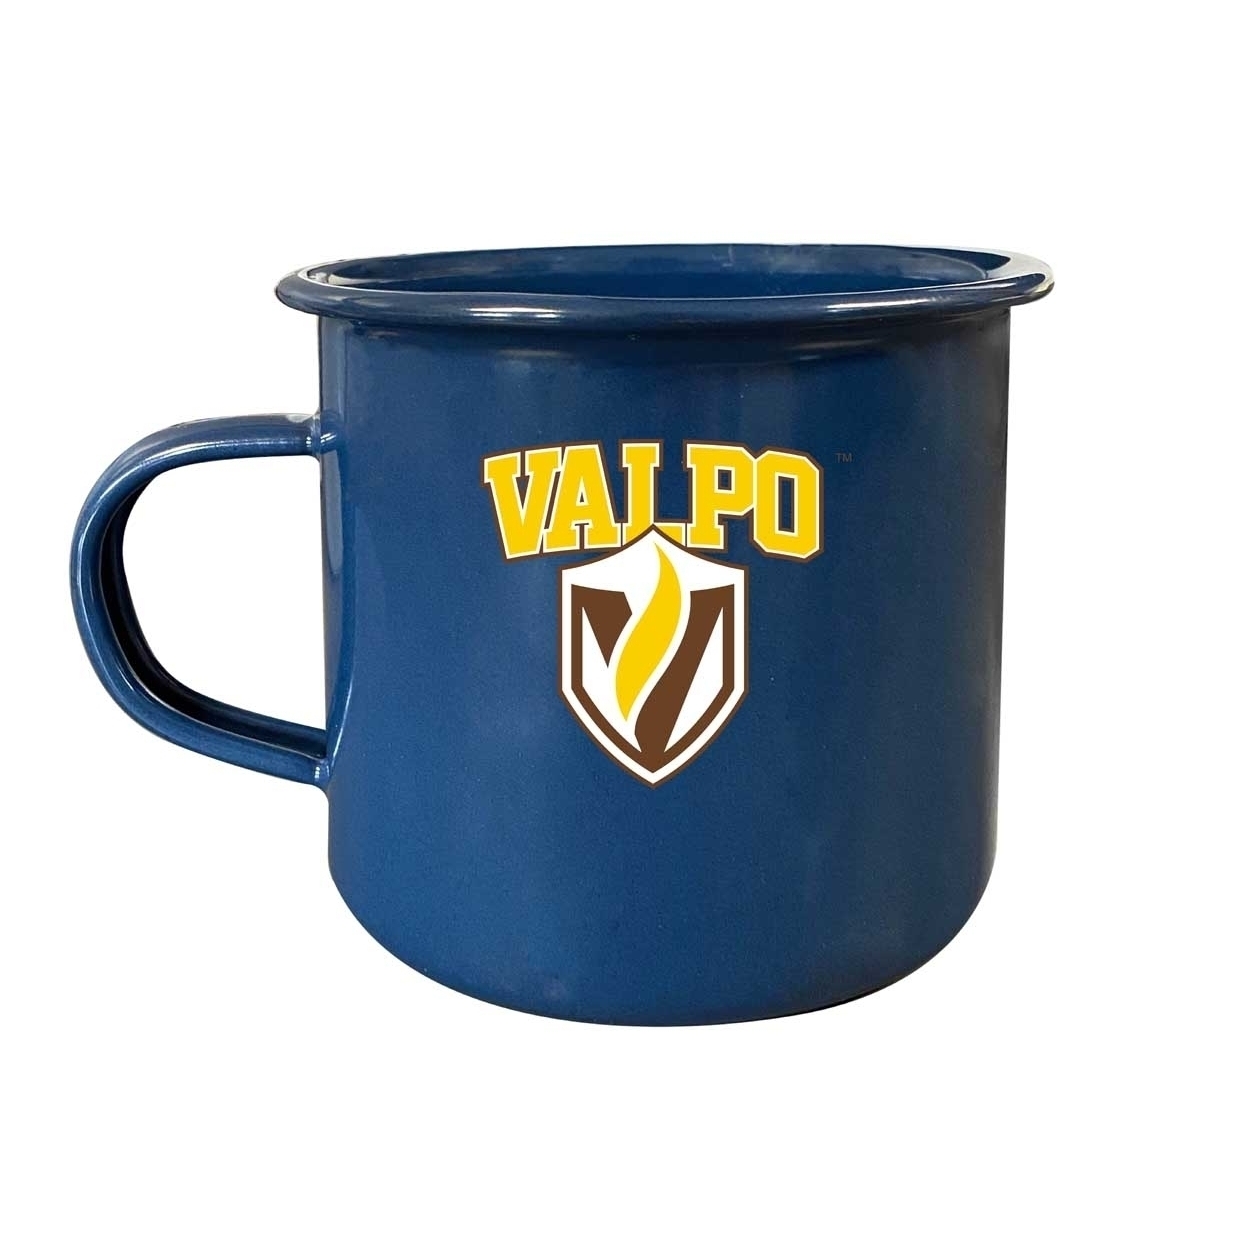 Valparaiso University Tin Camper Coffee Mug - Choose Your Color - Navy